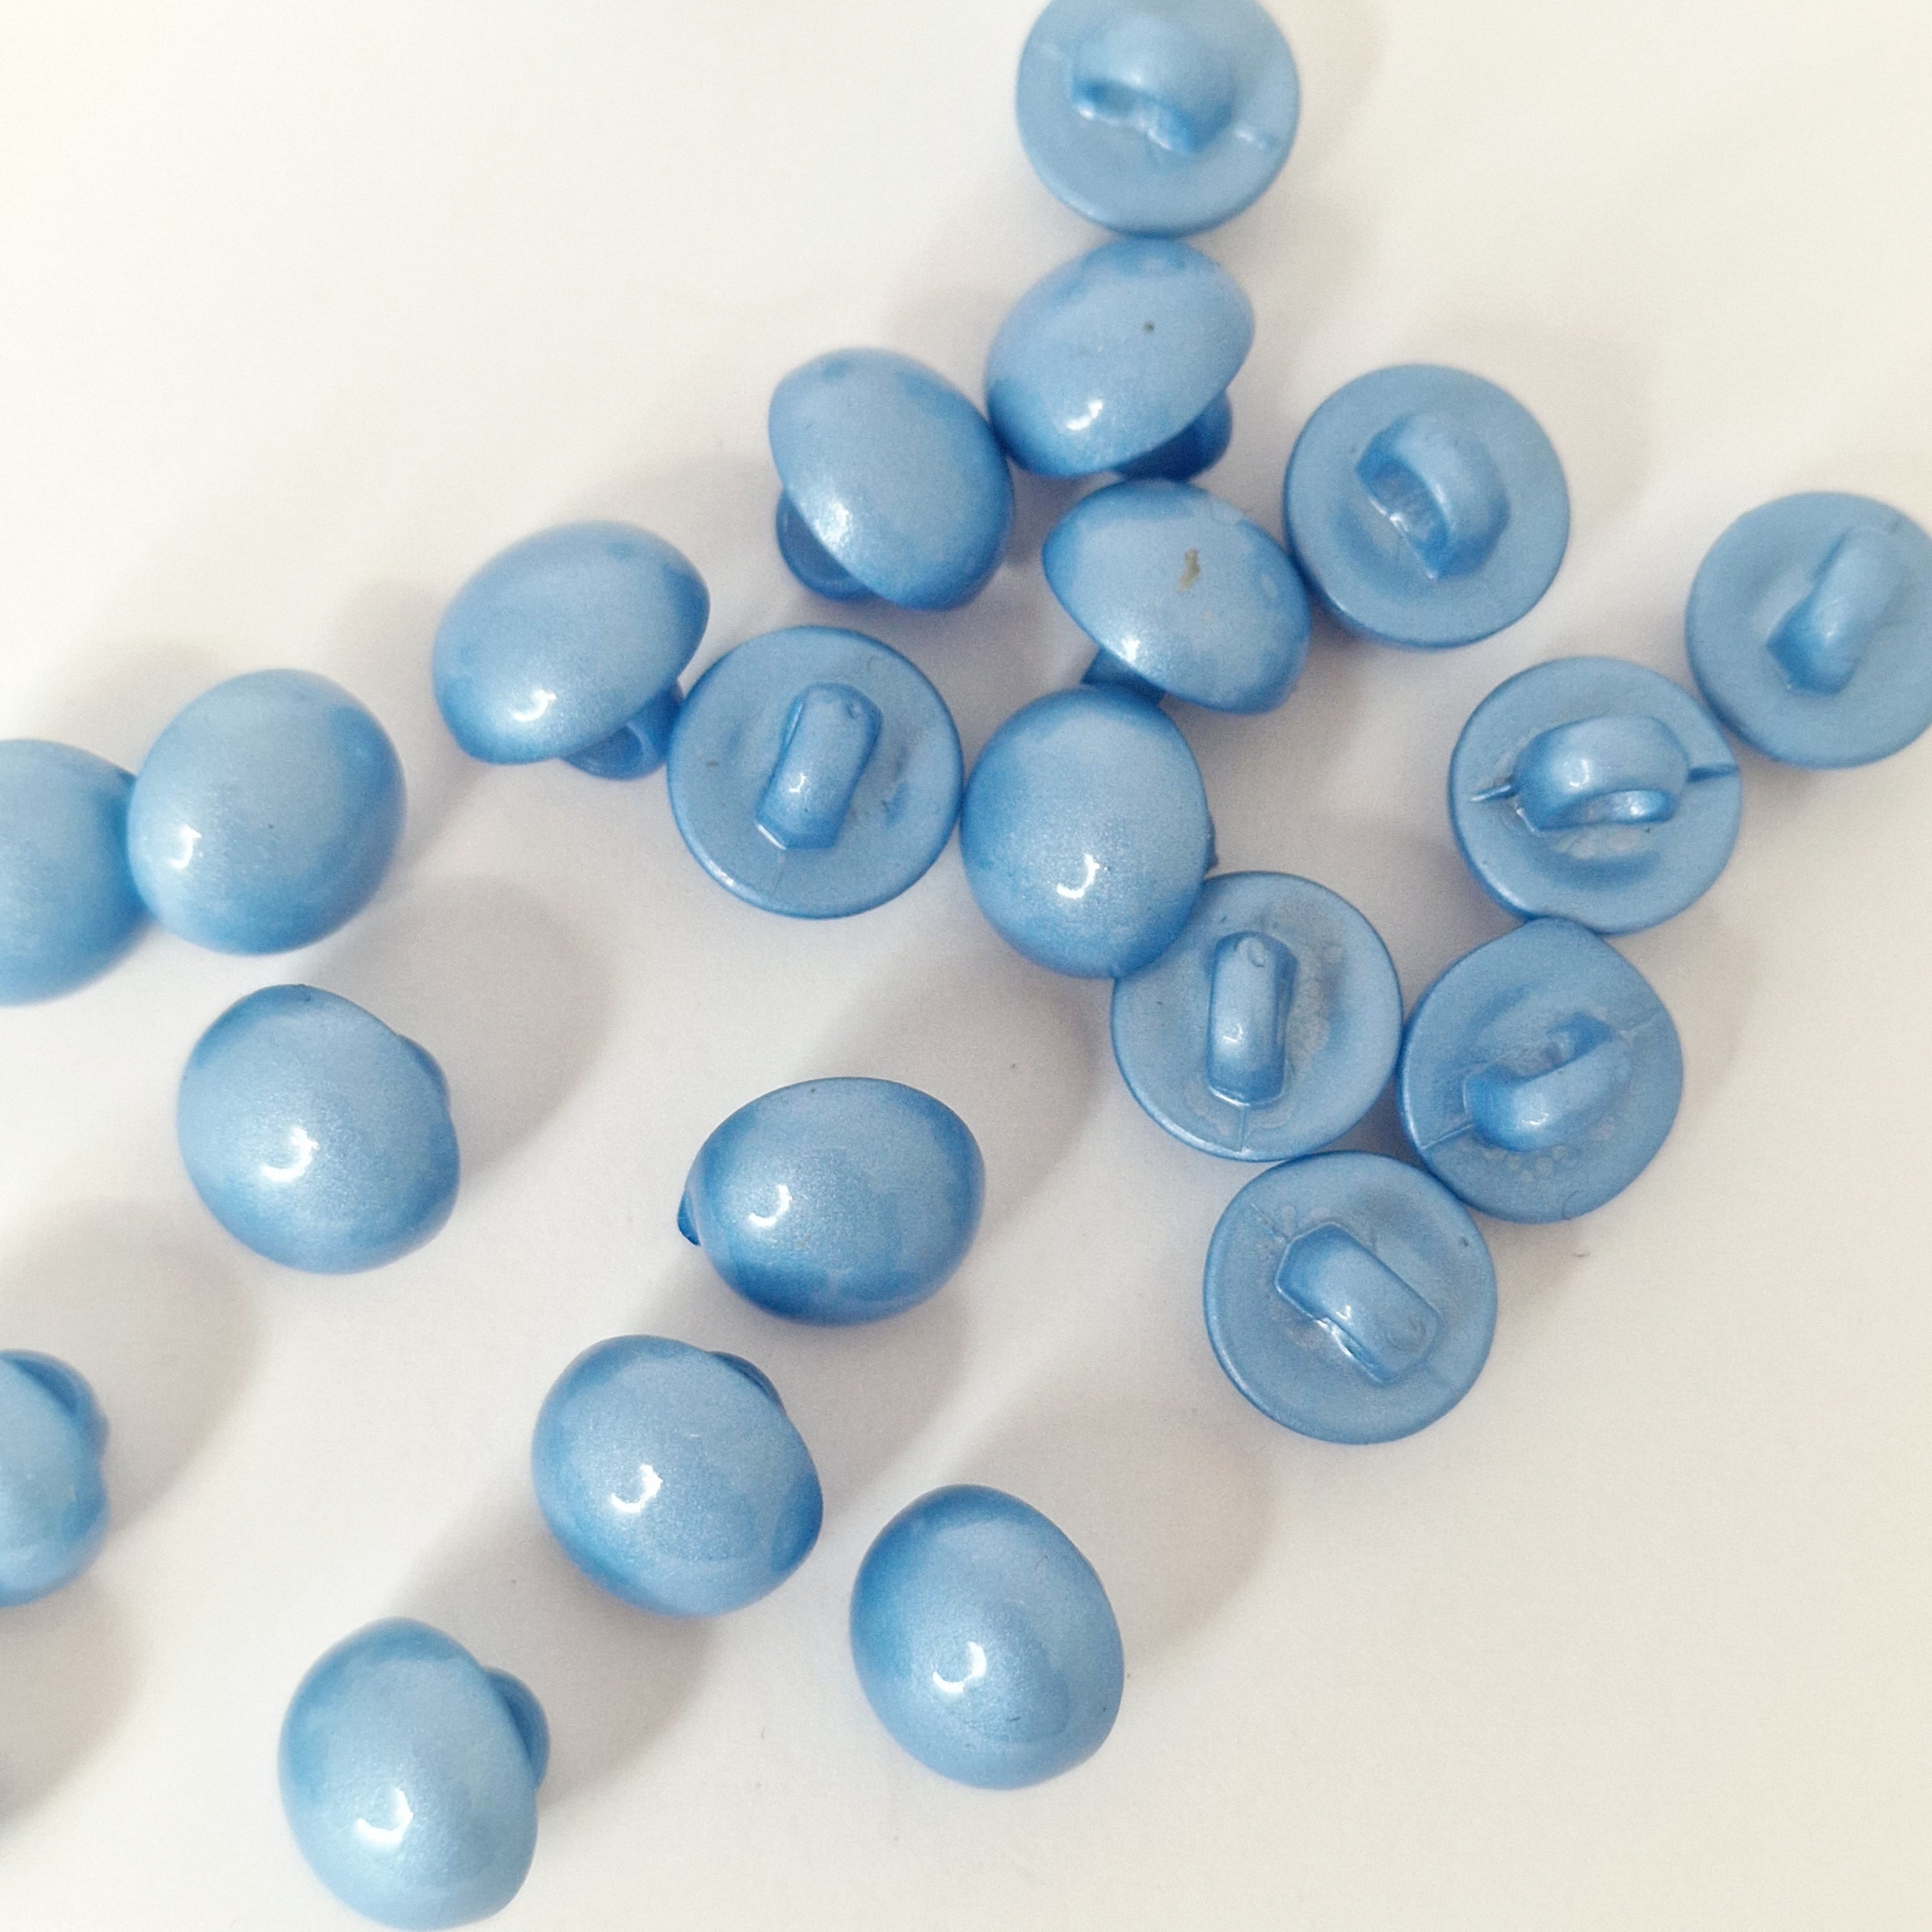 MajorCrafts 24pcs 11mm Light Blue High-Grade Acrylic Small Round Sewing Mushroom Shank Buttons